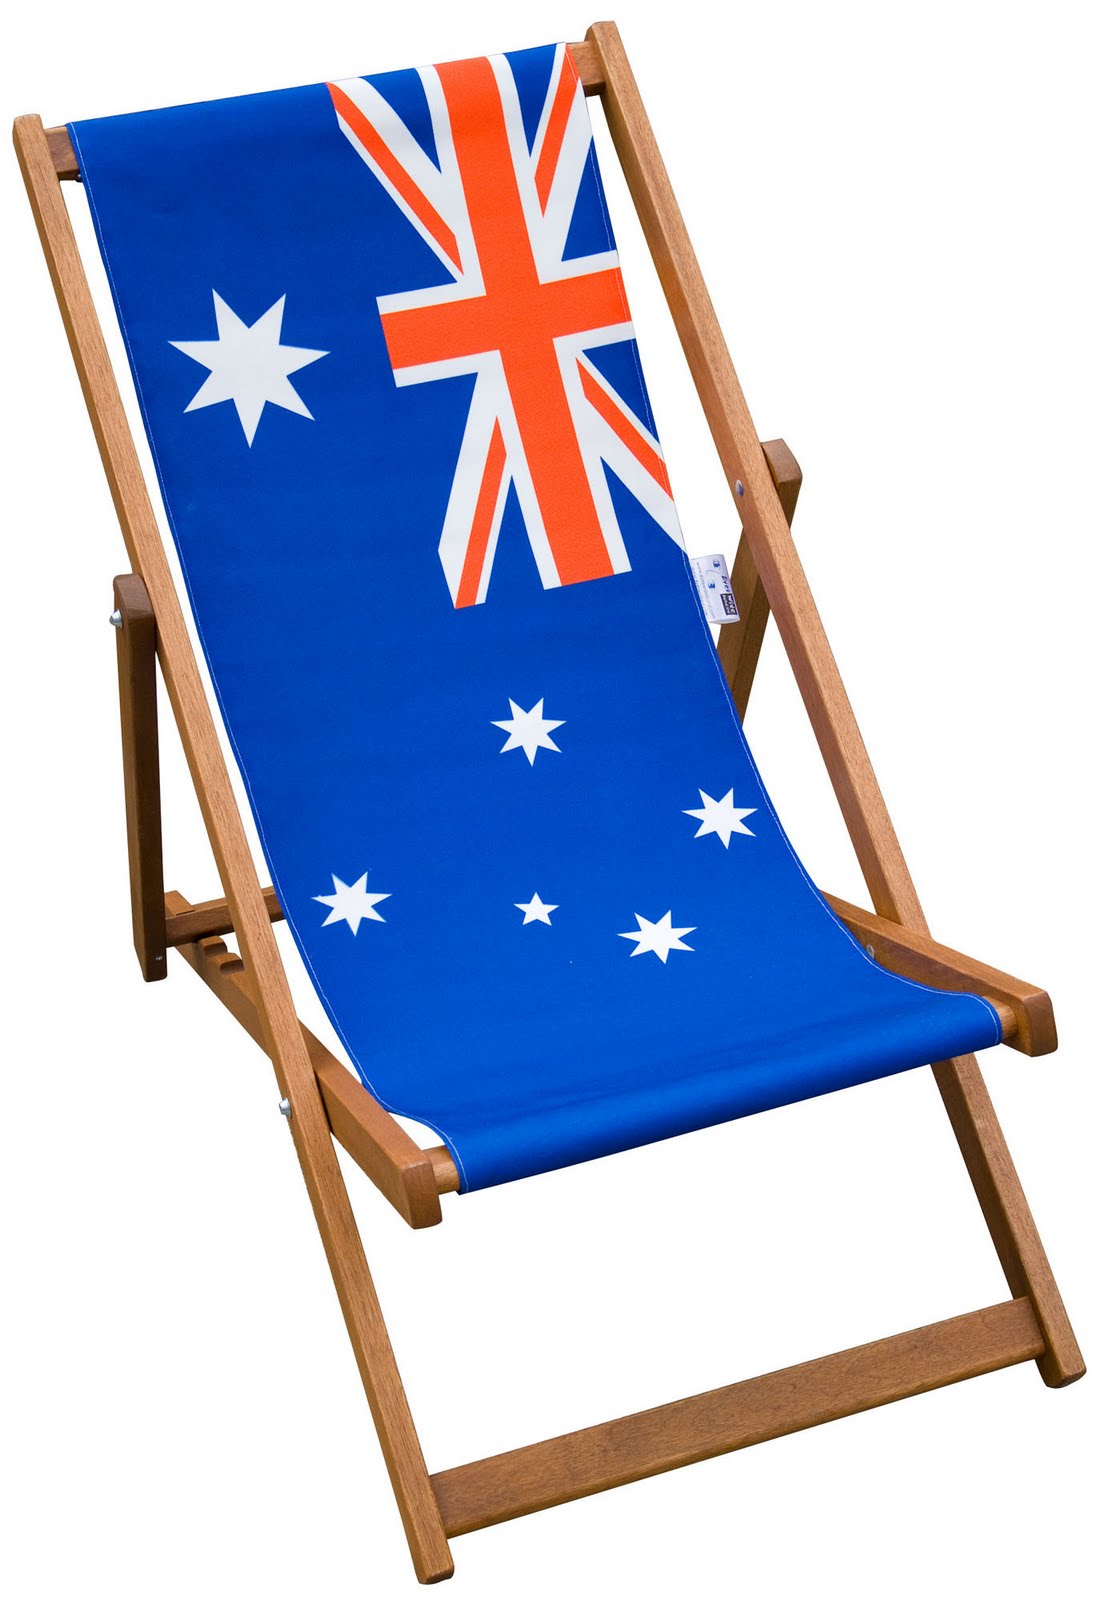 http://4.bp.blogspot.com/-n8dYPbWqKgU/Th6uMv_GD4I/AAAAAAAAA6I/-Rm9wcpwAXA/s1600/Australian+Flag+Deckchair.jpg